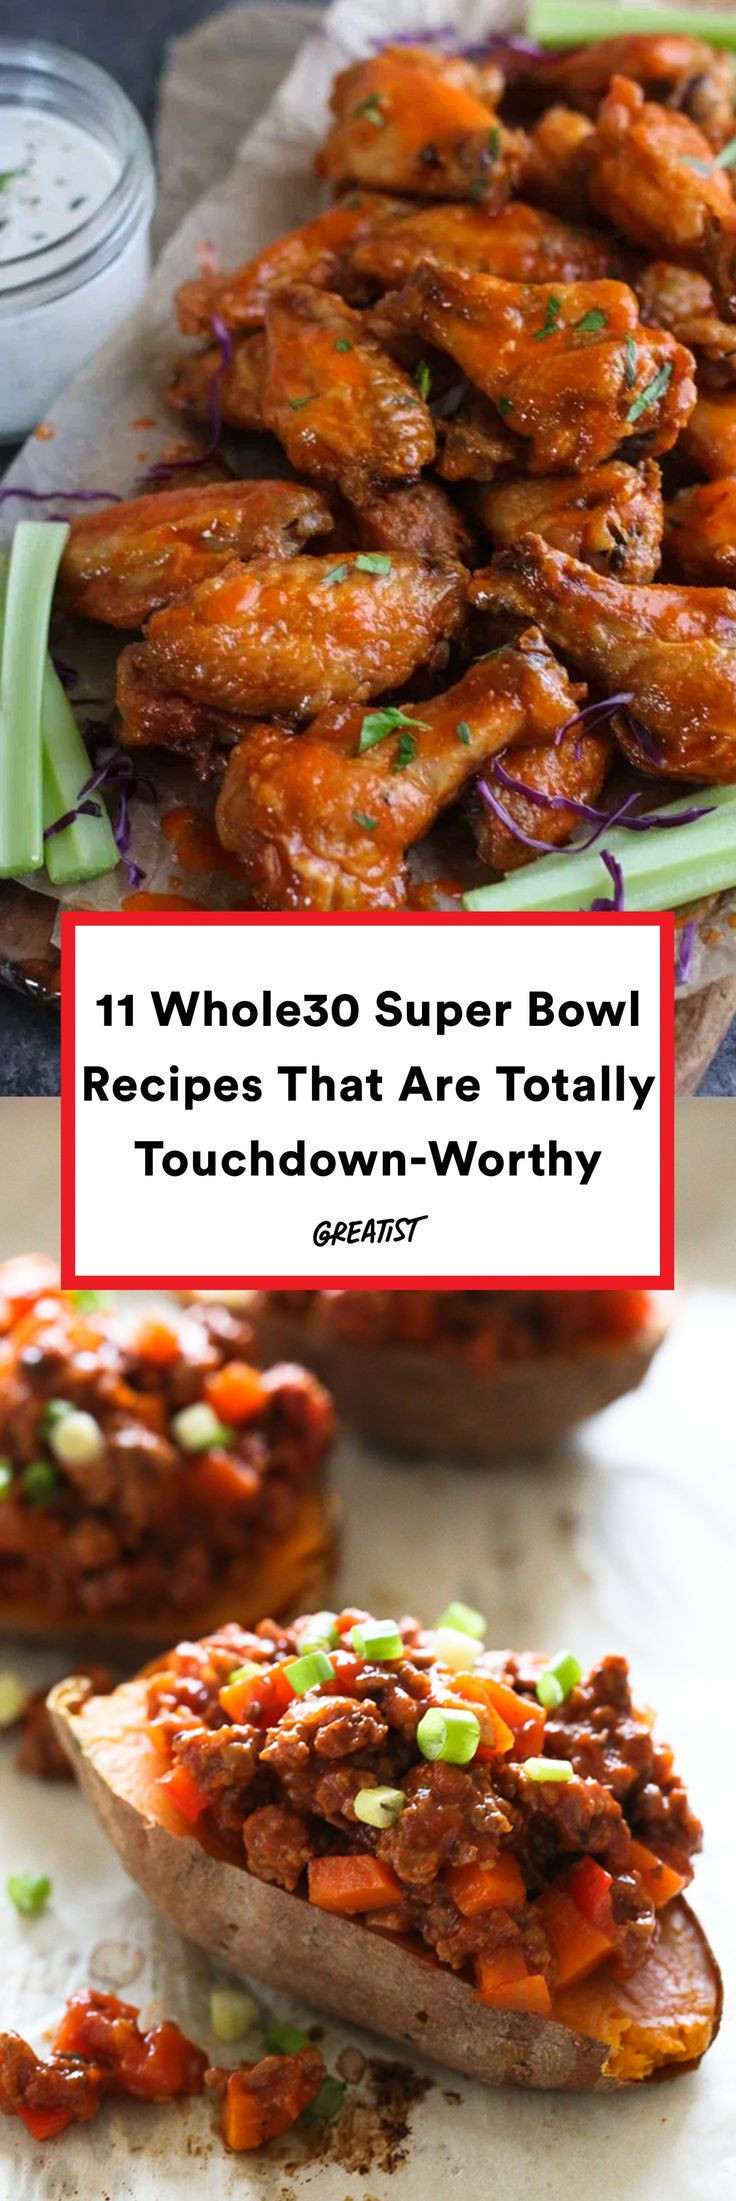 Whole30 Super Bowl Recipes
 11 Whole30 Super Bowl Recipes That Are Guaranteed Winners